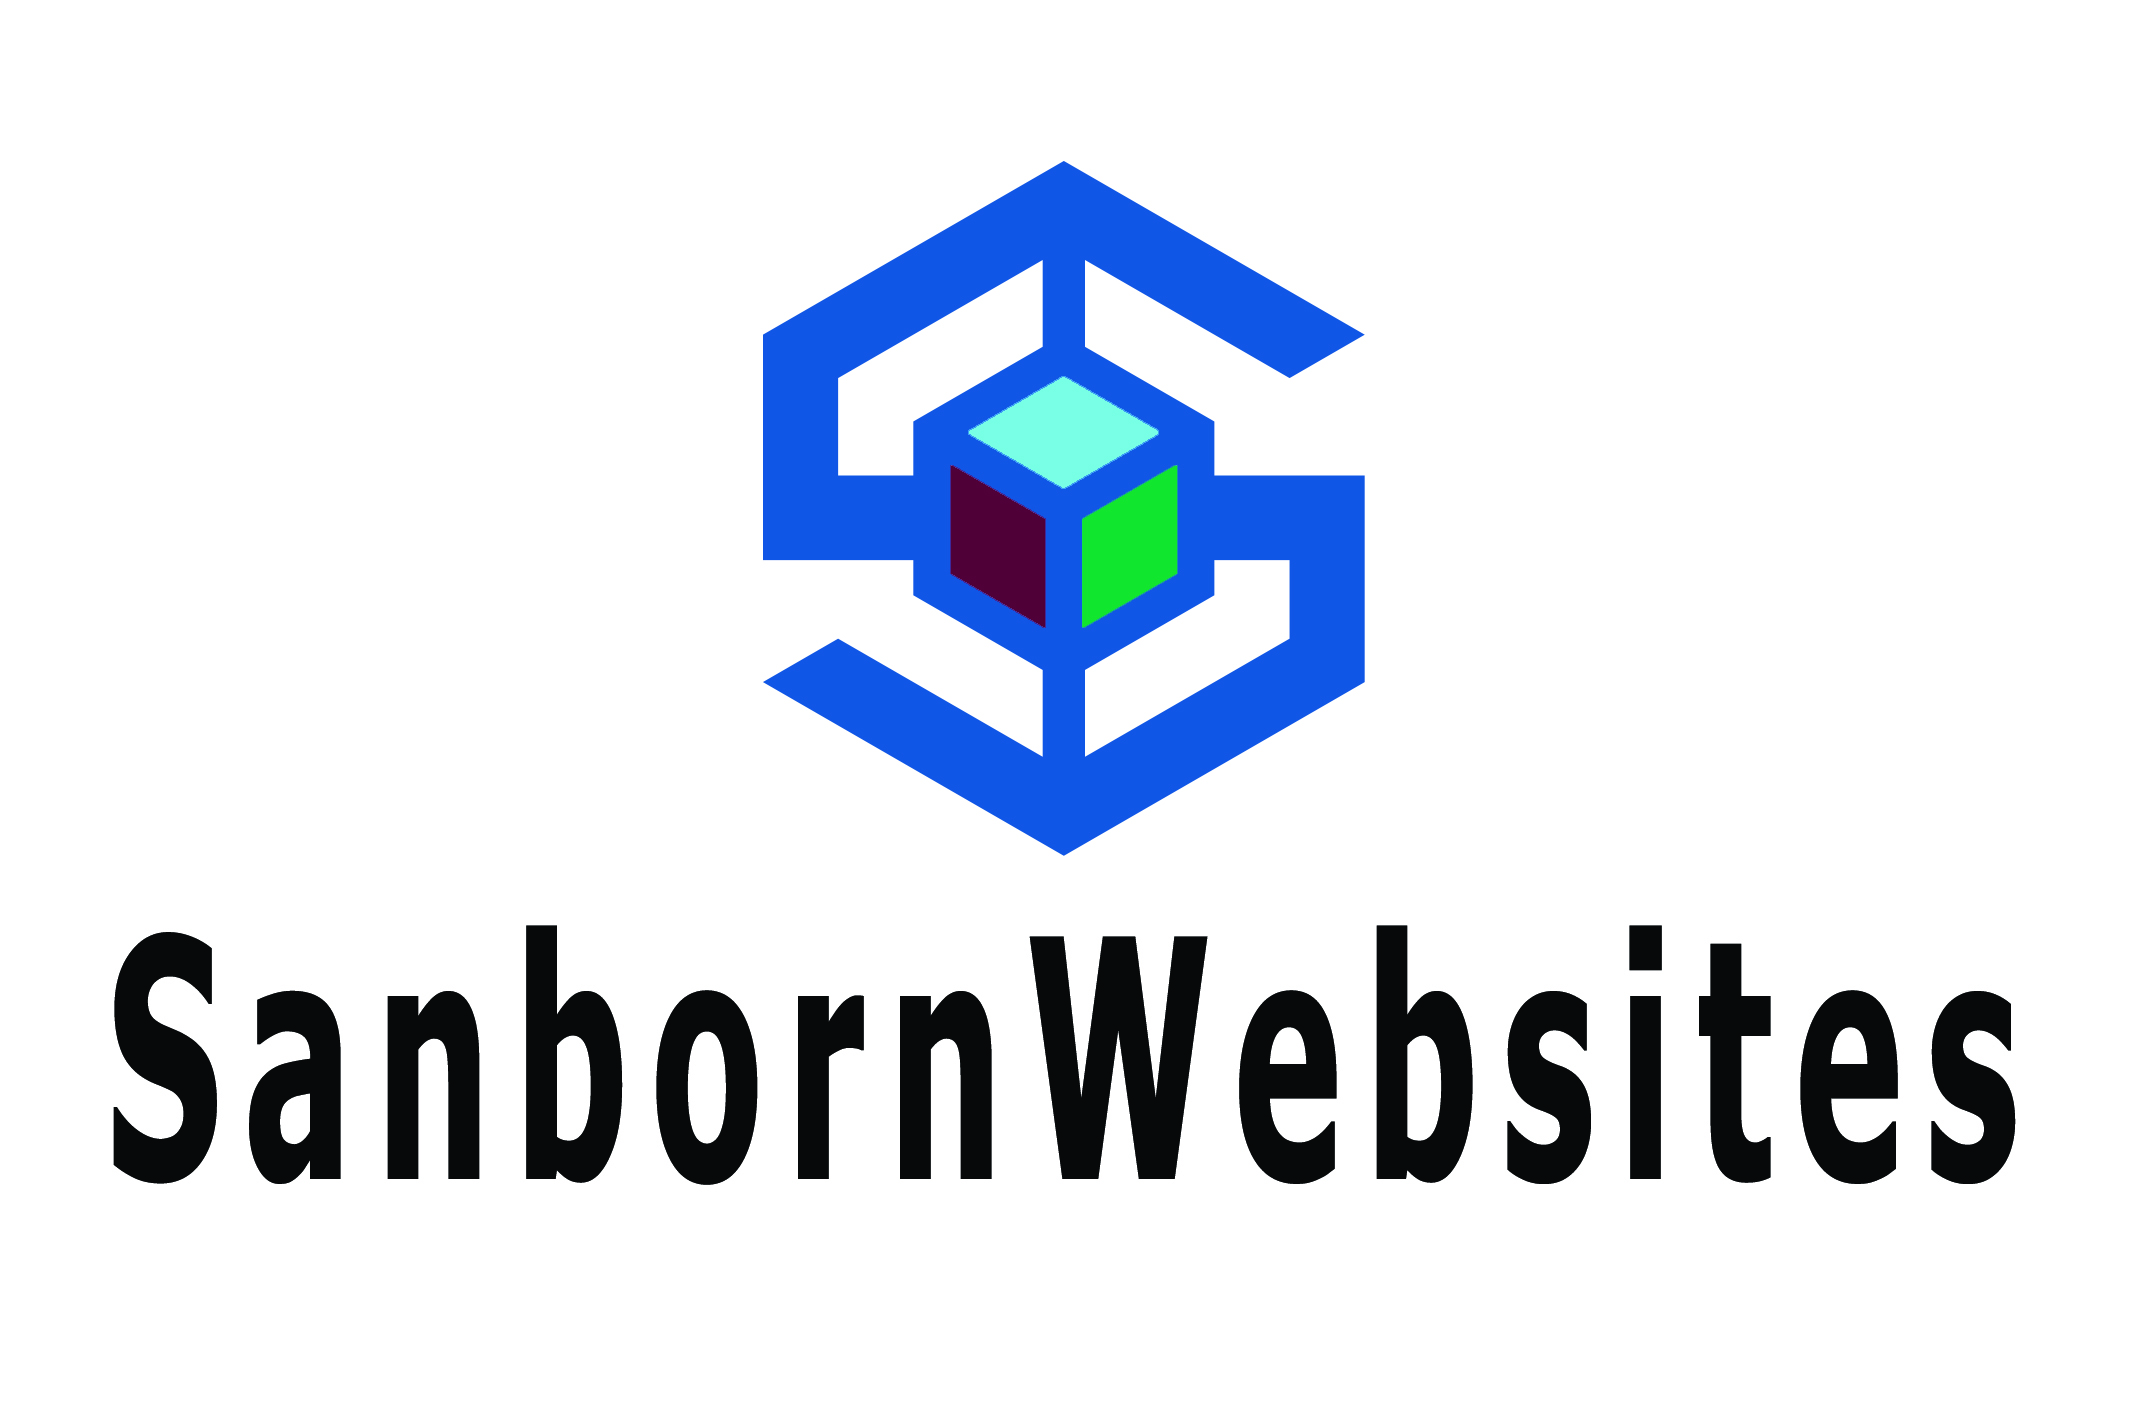 Sanborn Websites